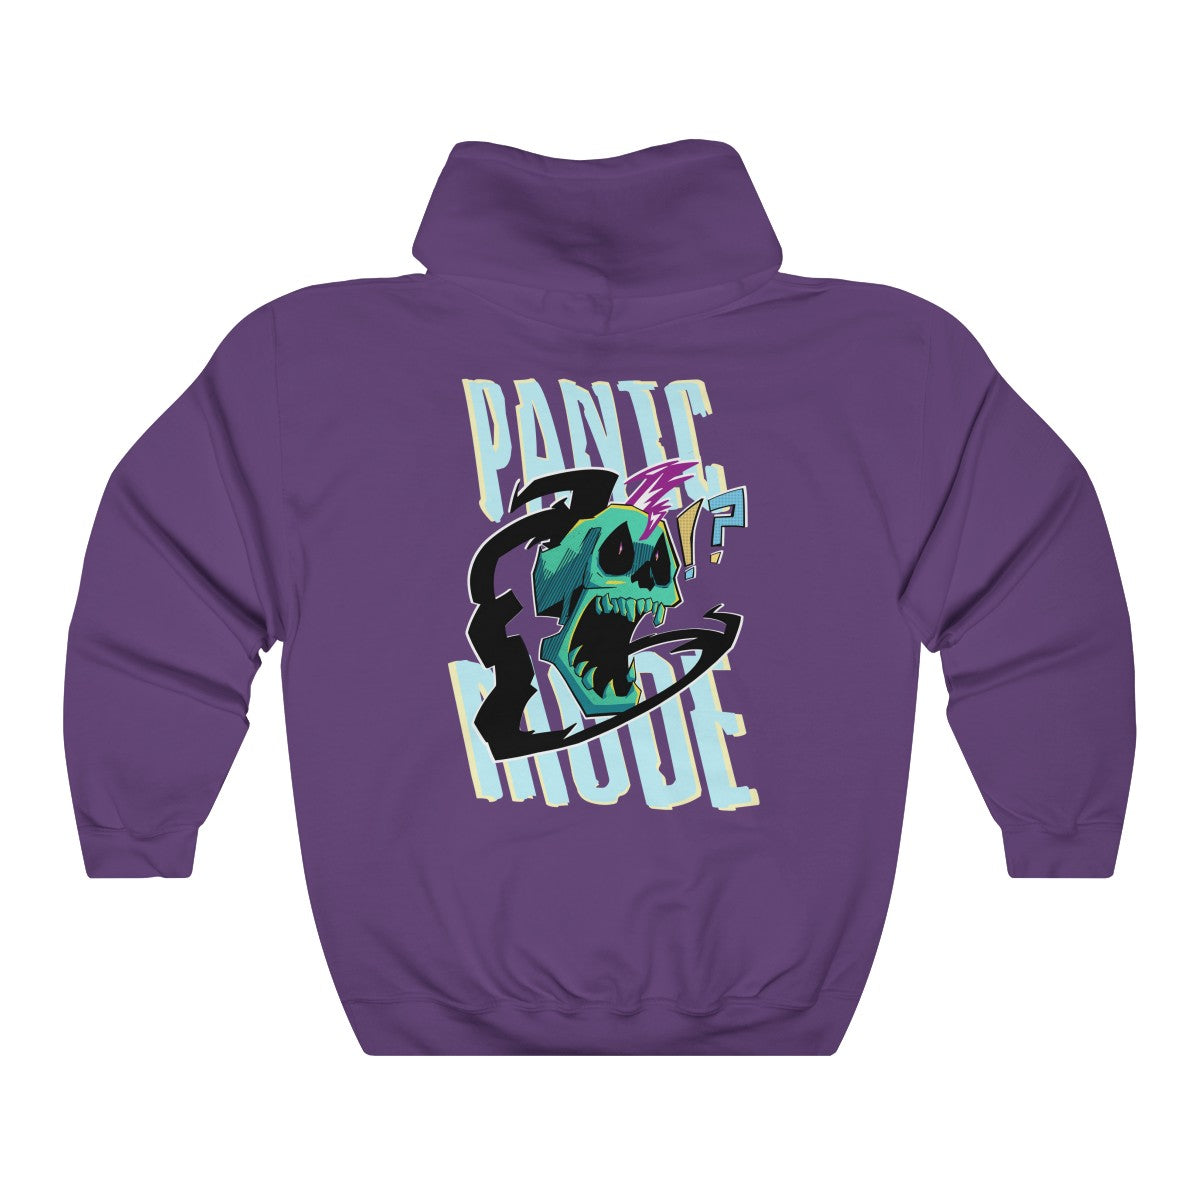 Panic Mode! - Hoodie Hoodie AFLT-DaveyDboi Purple S 